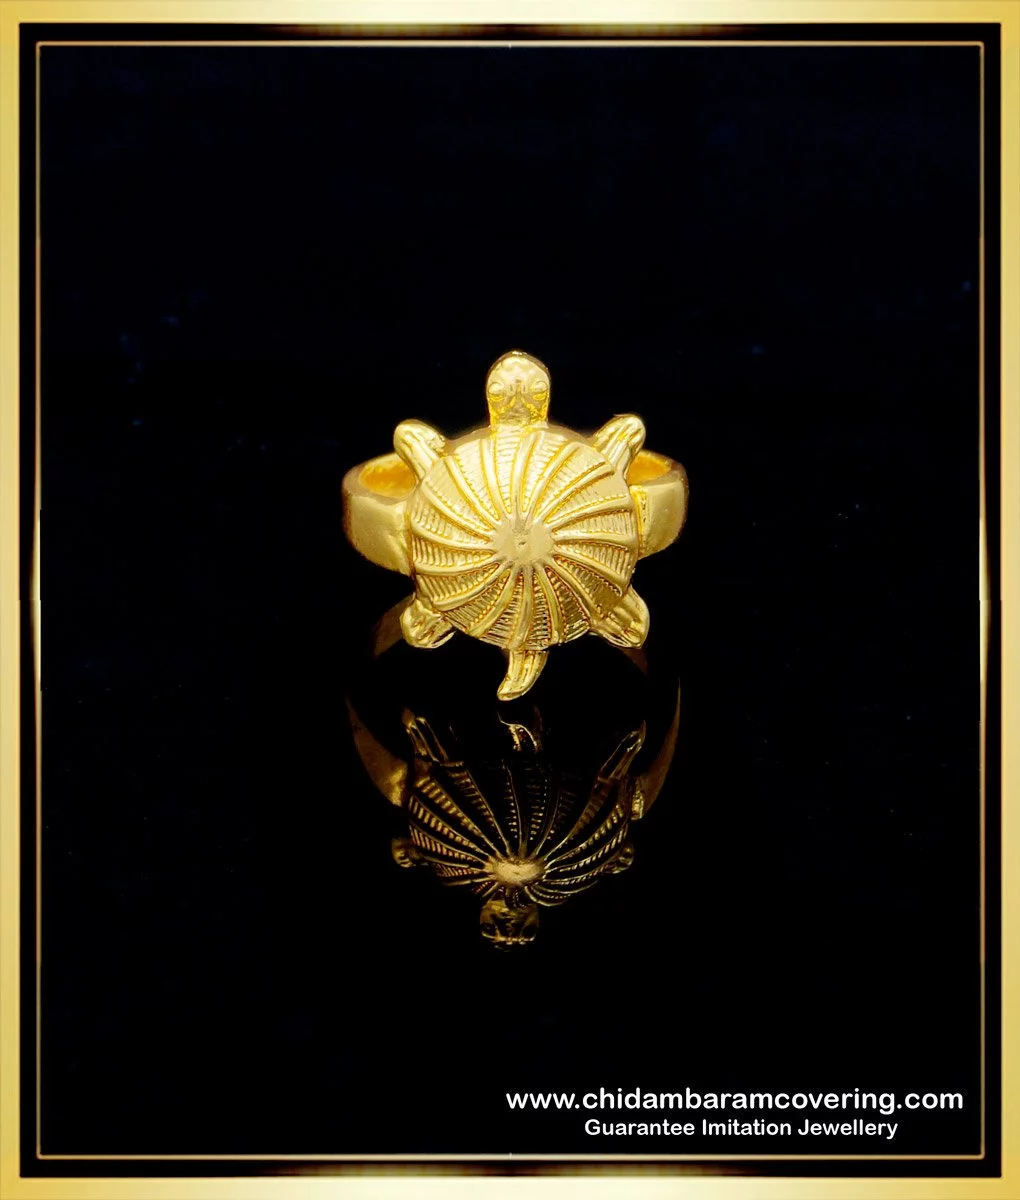 22K Gold 'Tortoise' Ring For Men with Cz & Color Stones - 235-GR6276 in  5.900 Grams